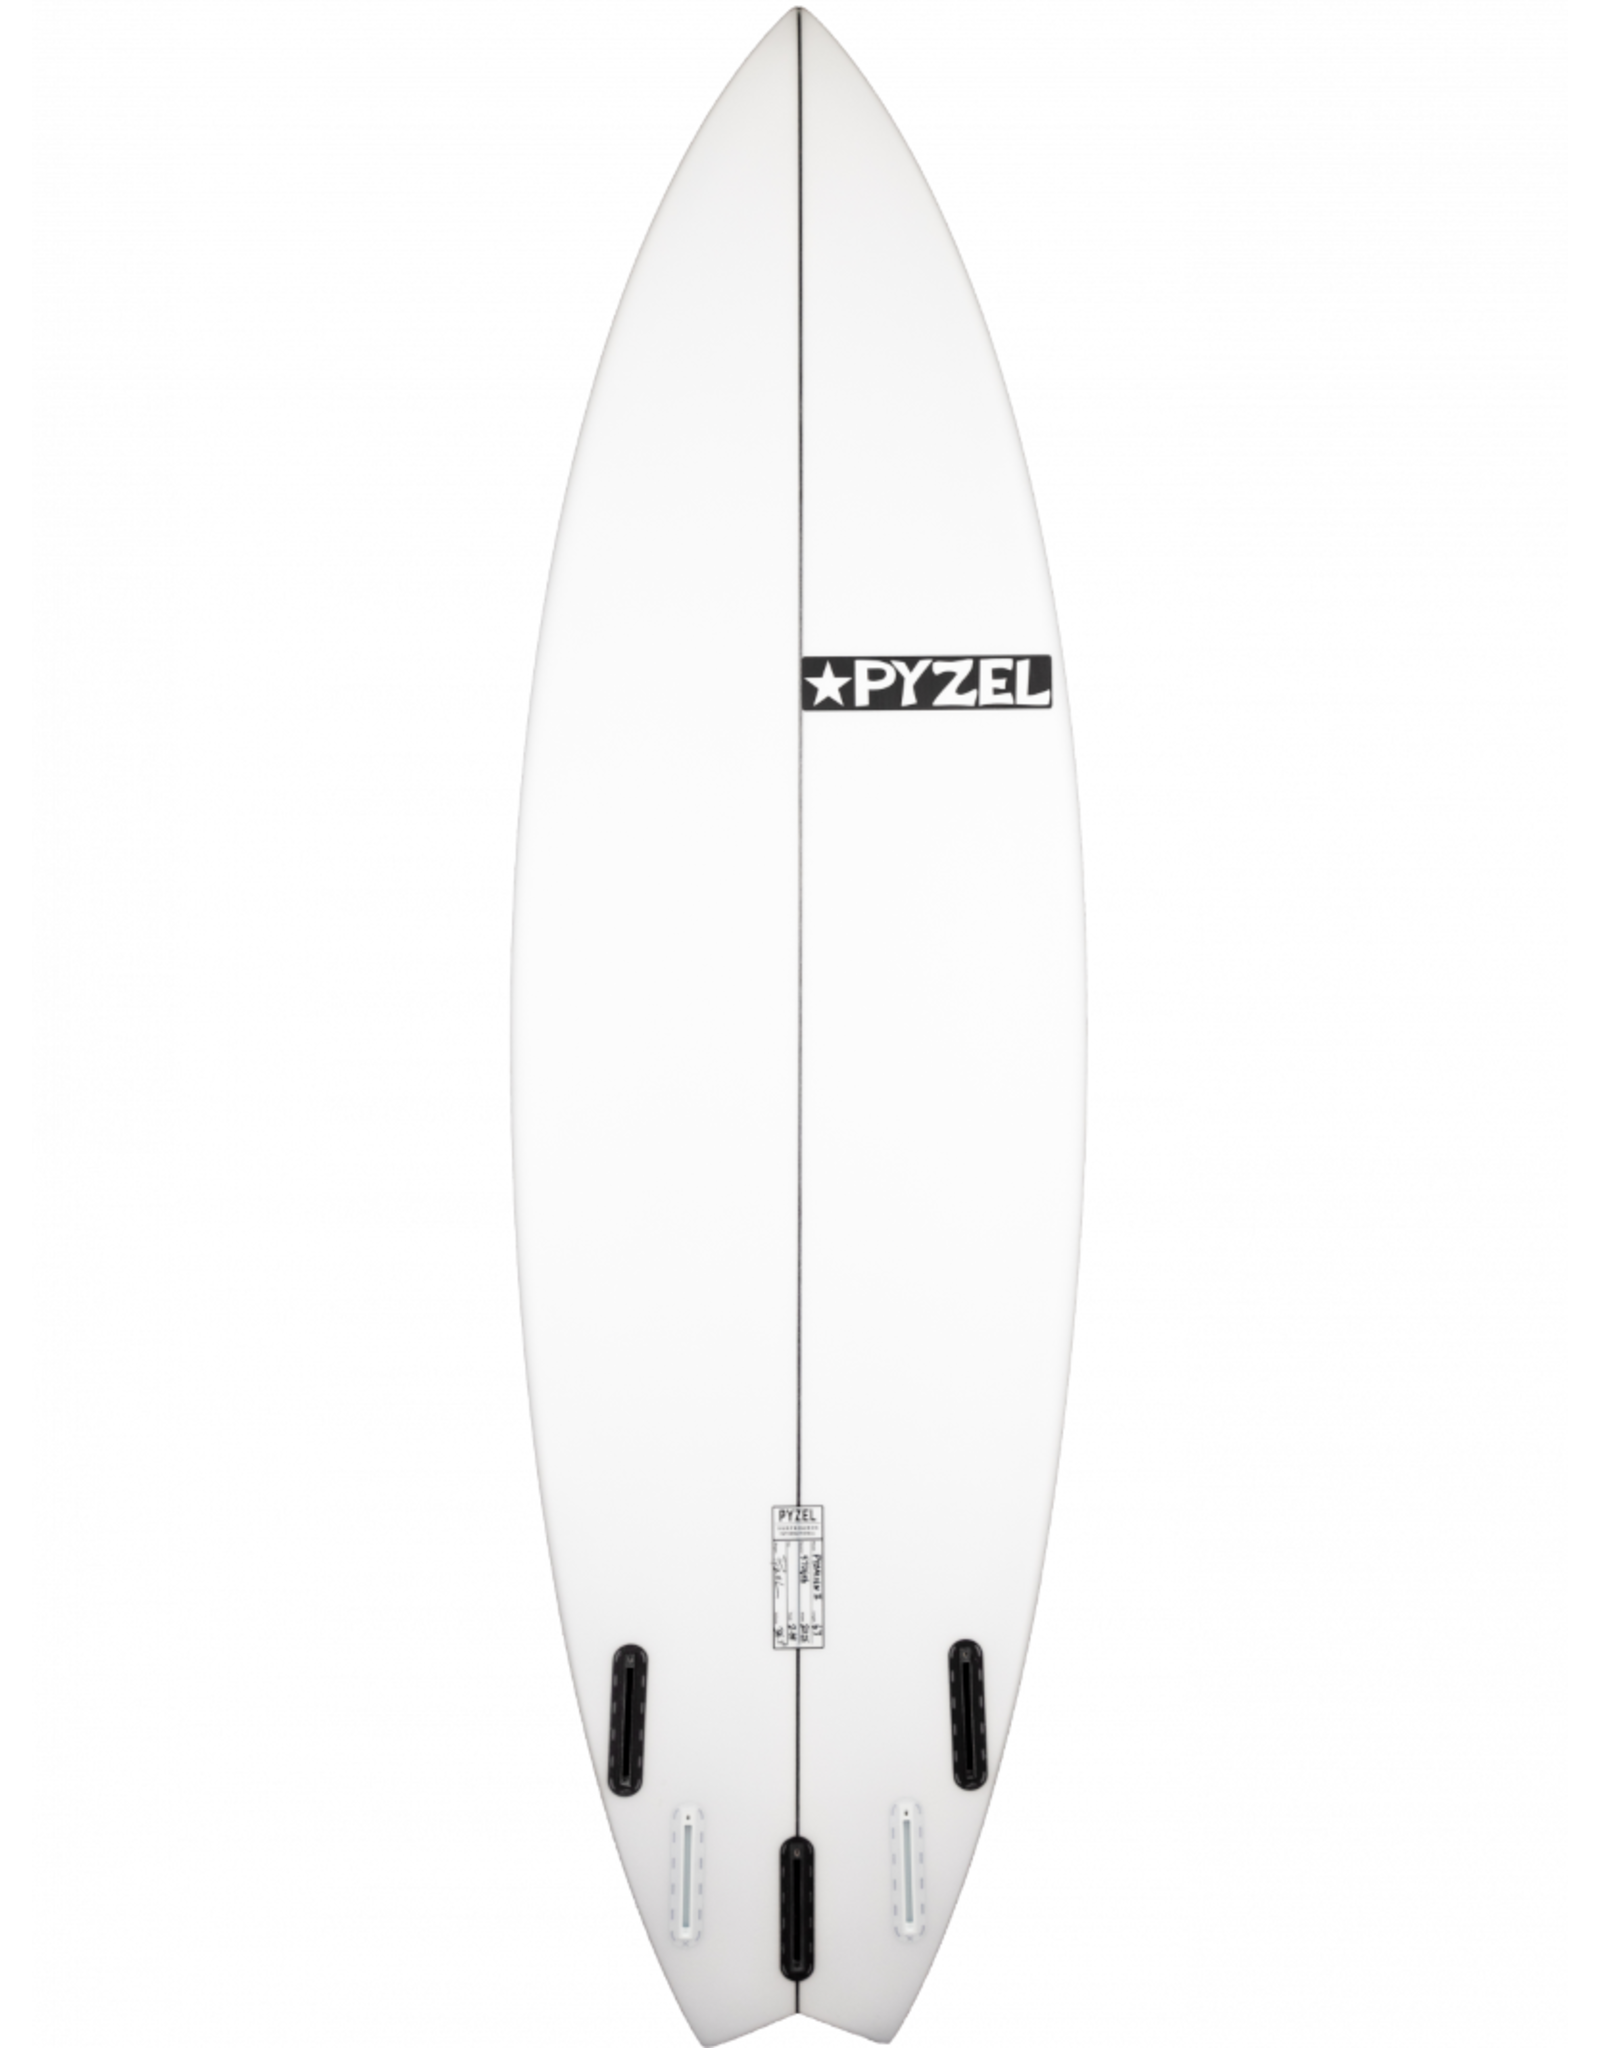 Pyzel Surfboards Pyzel 6'2" Pyzalien 2 Futures